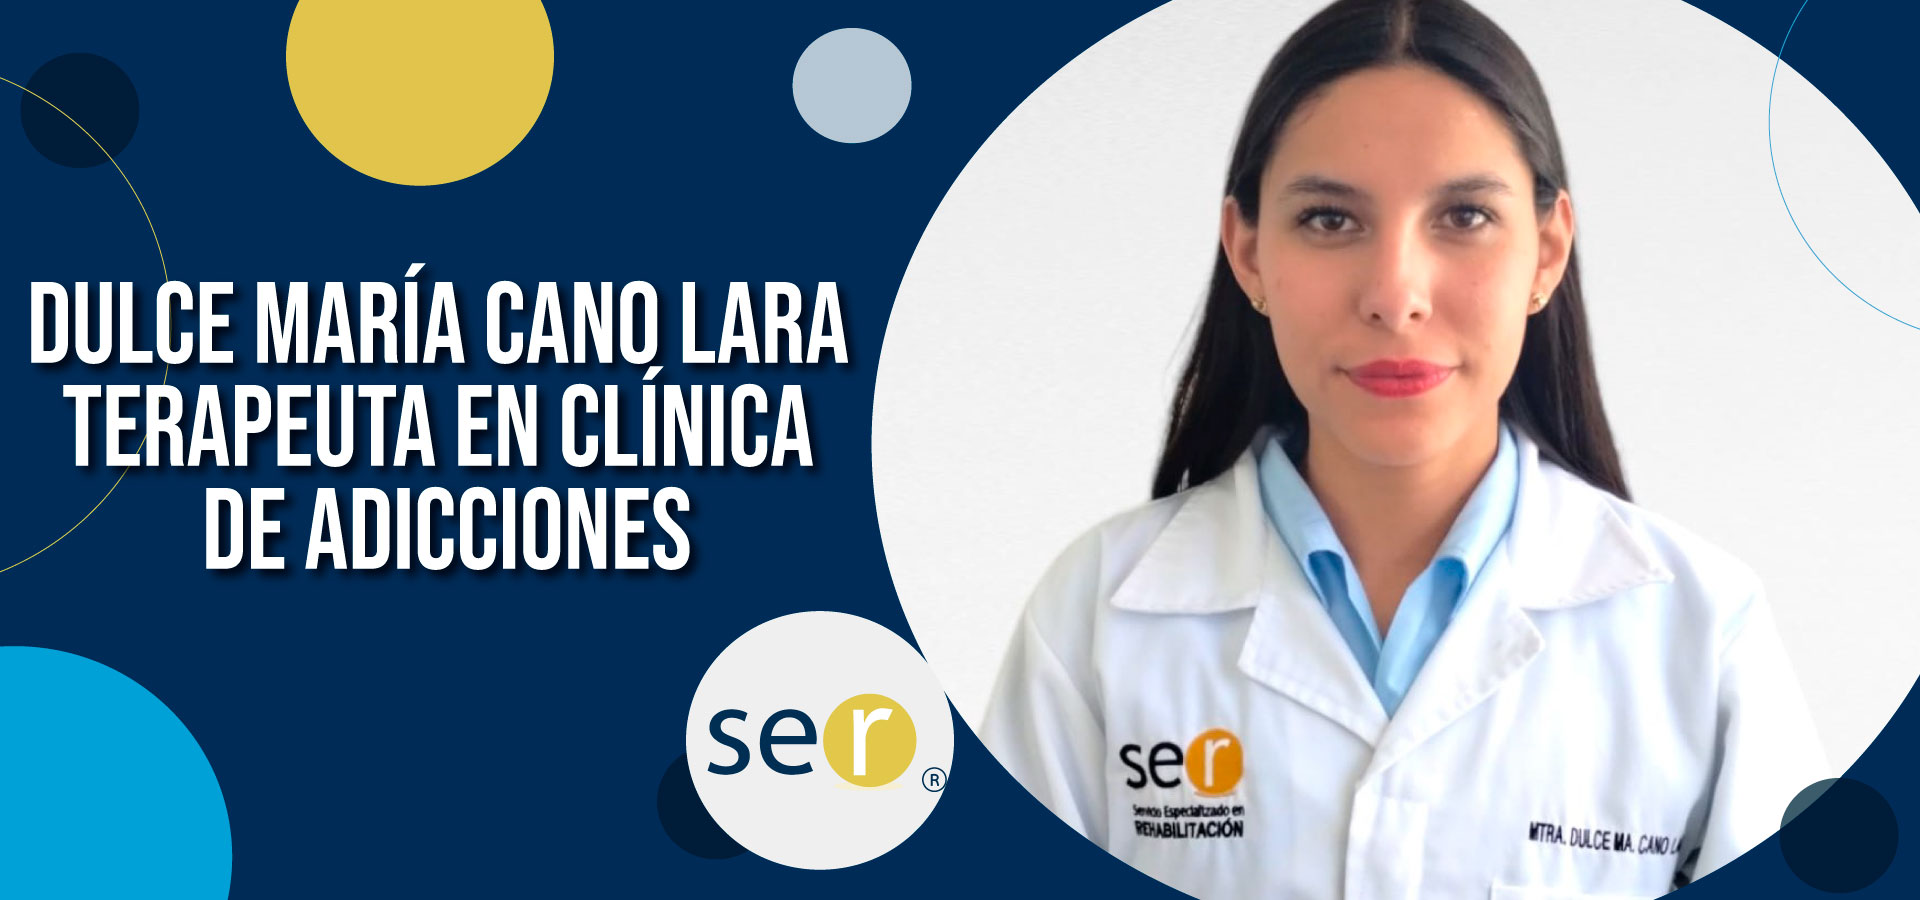 Clinica ser banner Dulce Maria Cano Lara Terapeuta en clinica de adicciones - Clínica-SER